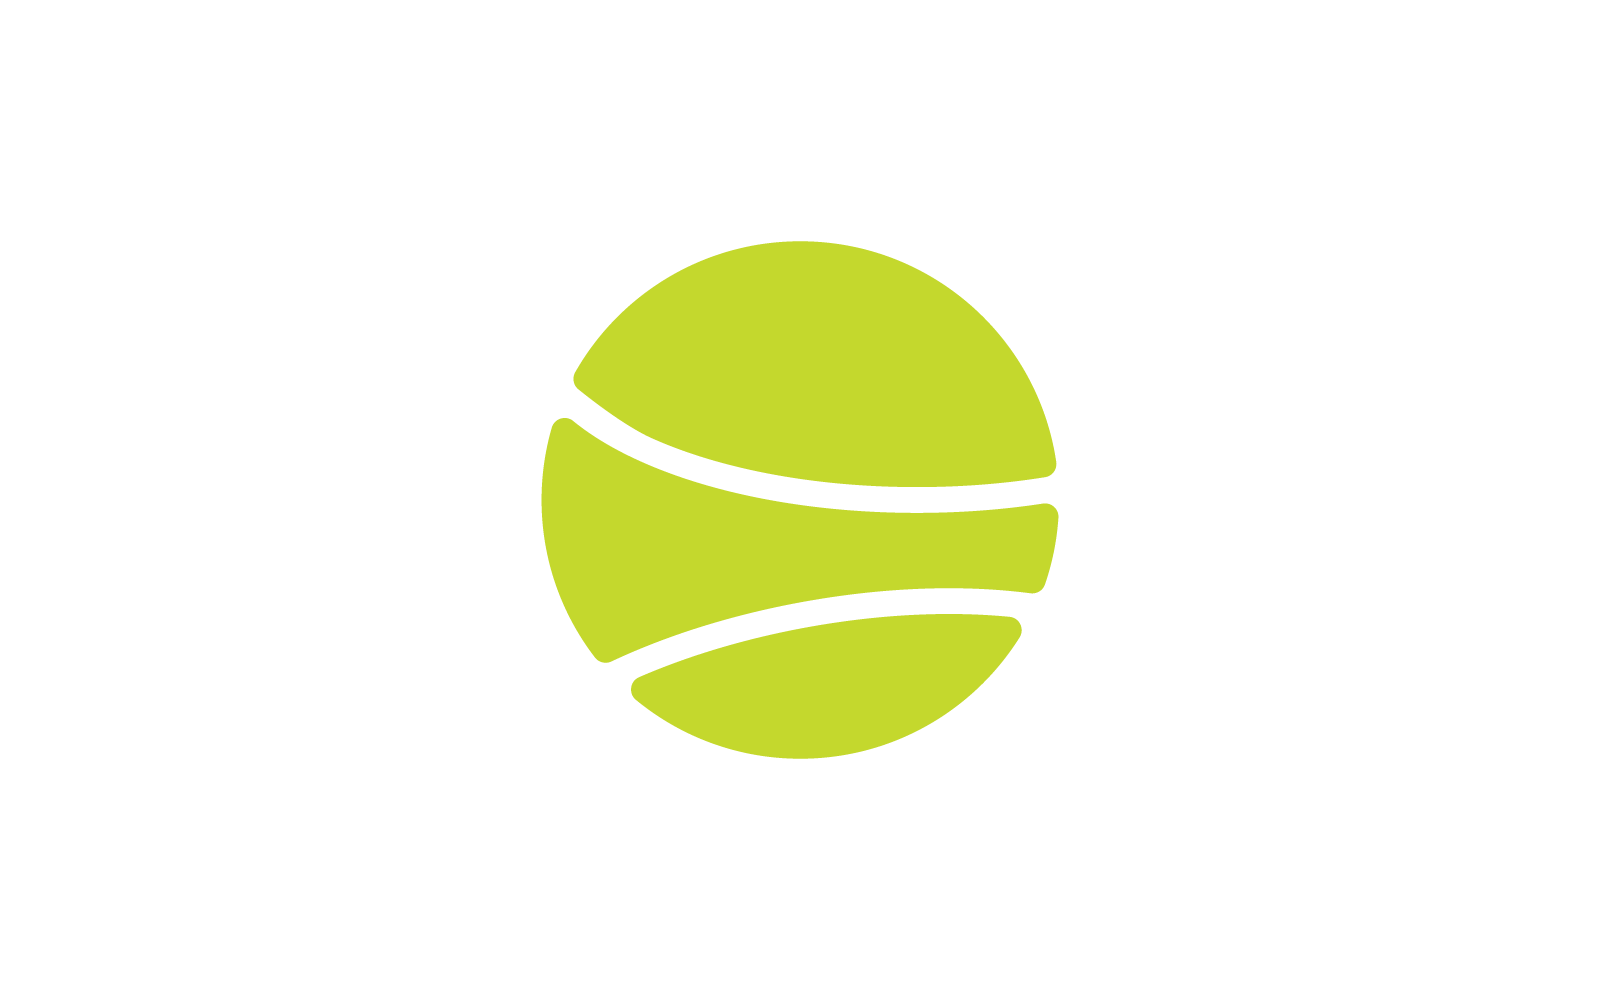 Tennis ball illustration vector design logo template